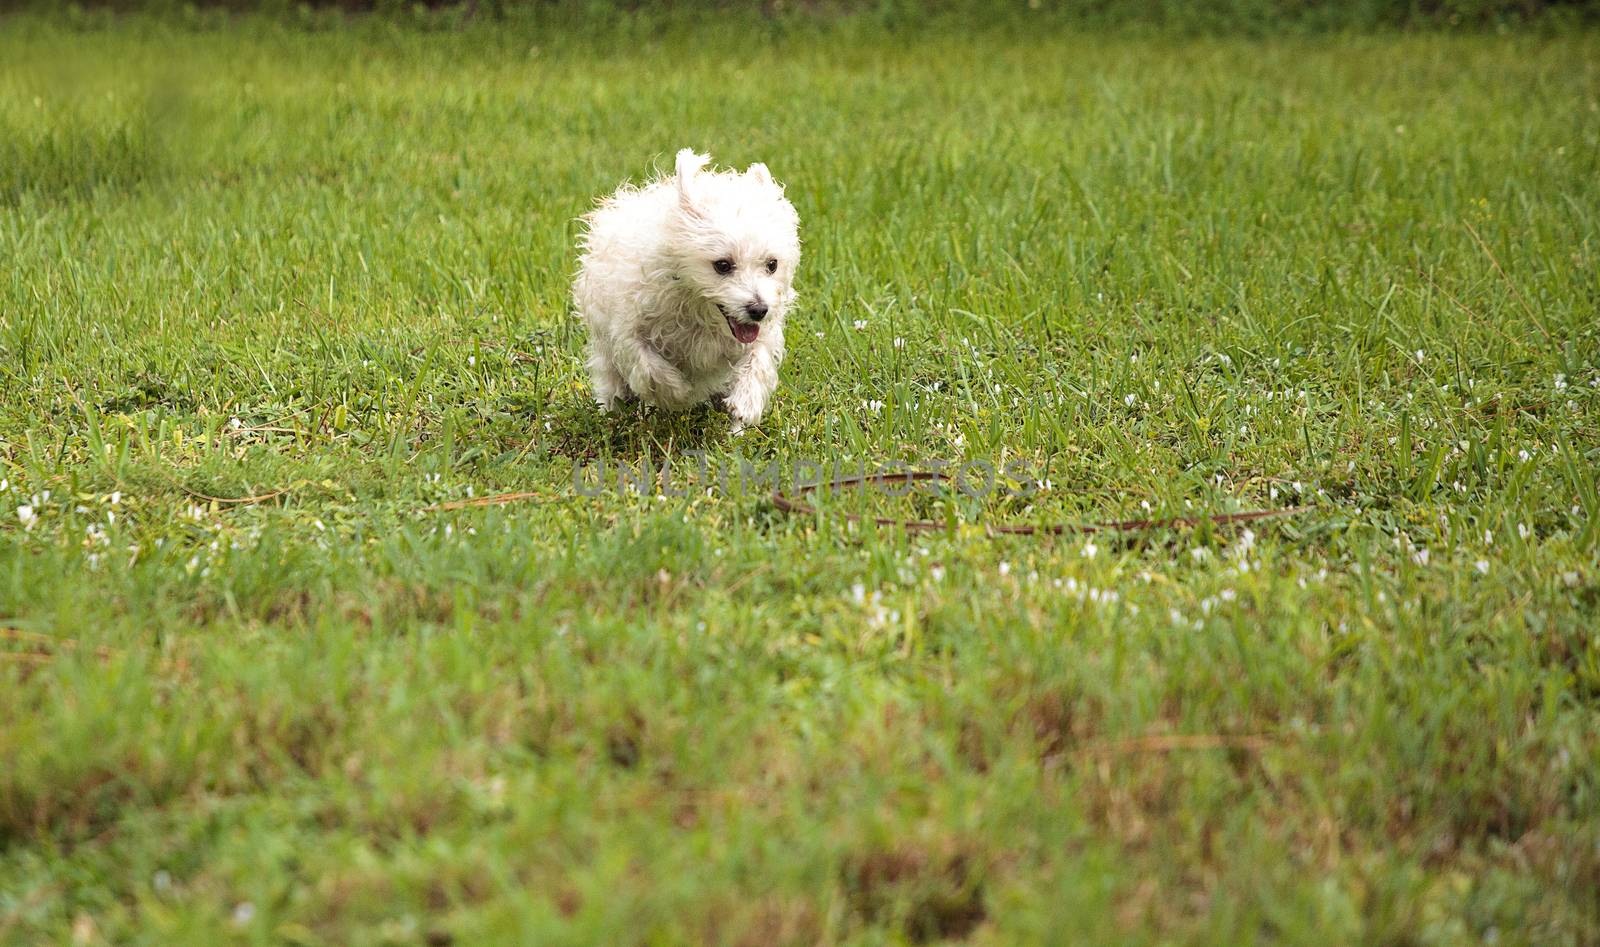 Happy running West Highland Terrier dog runs through a tropical garden in Florida.